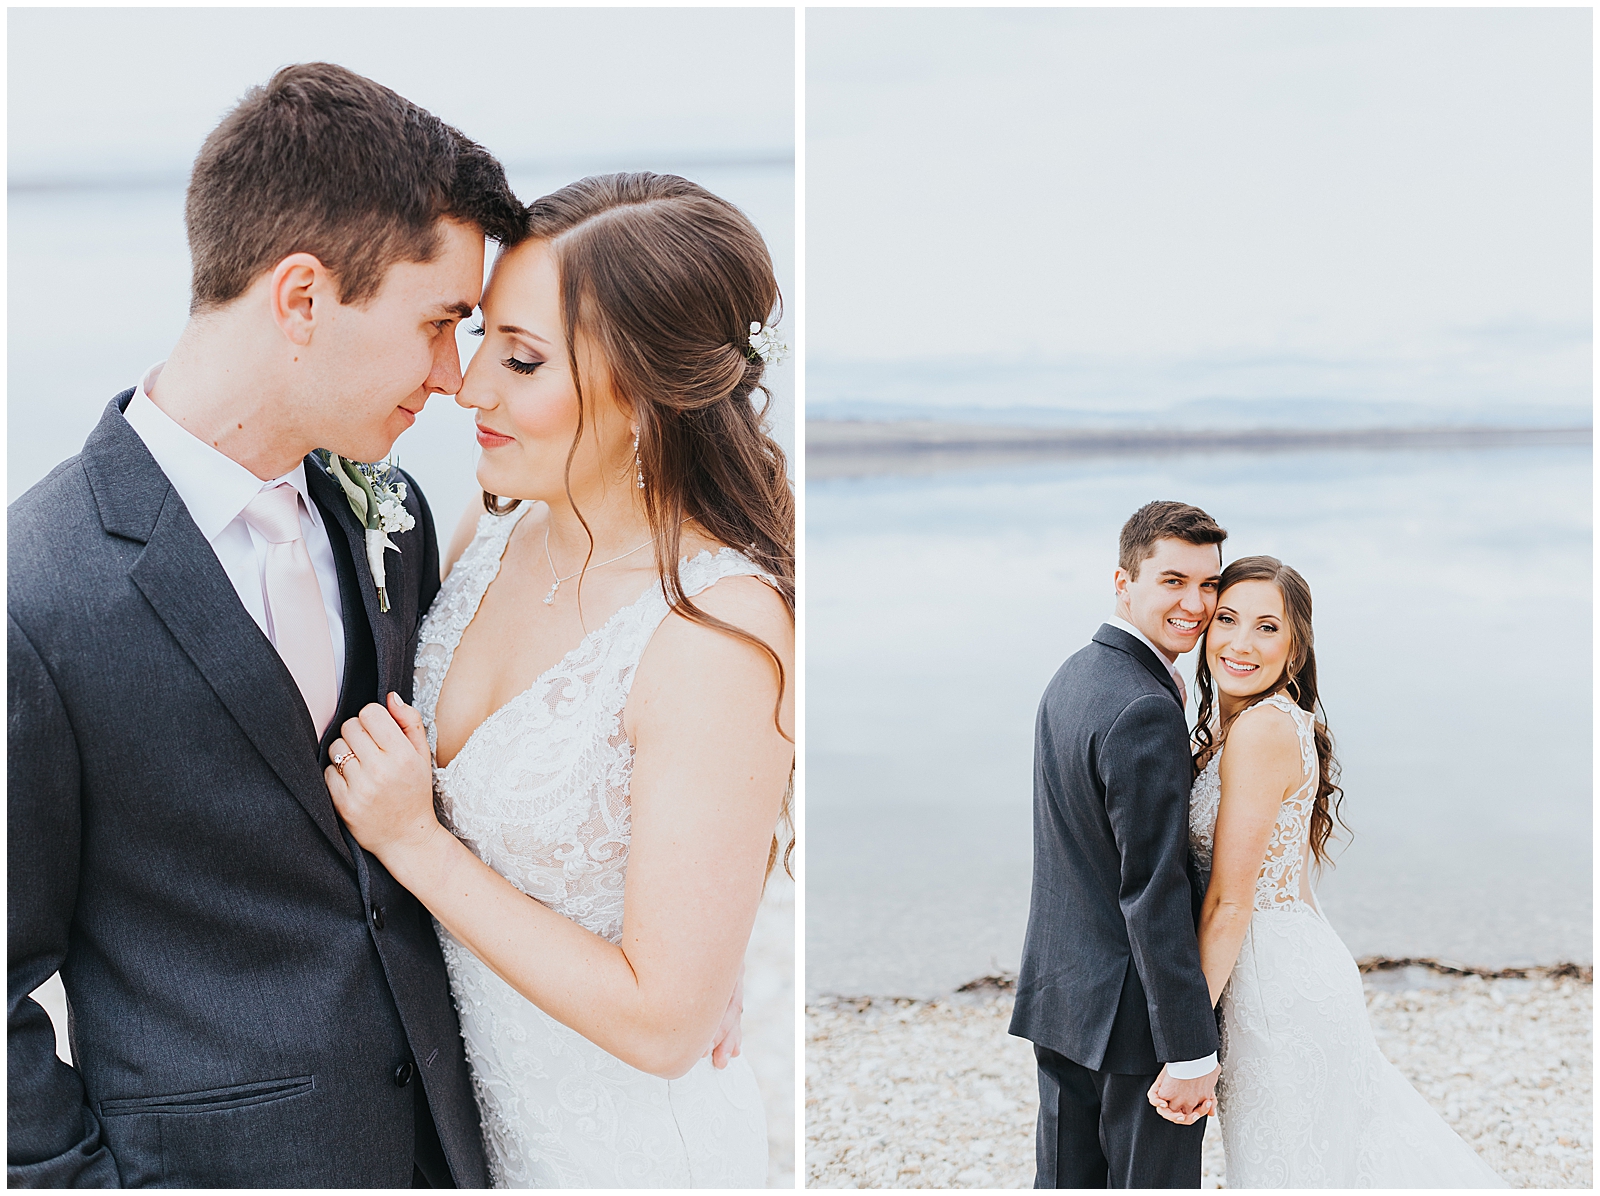 Dusty Blue and Blush Lake Wedding in Idaho by Karli Elliott Photography